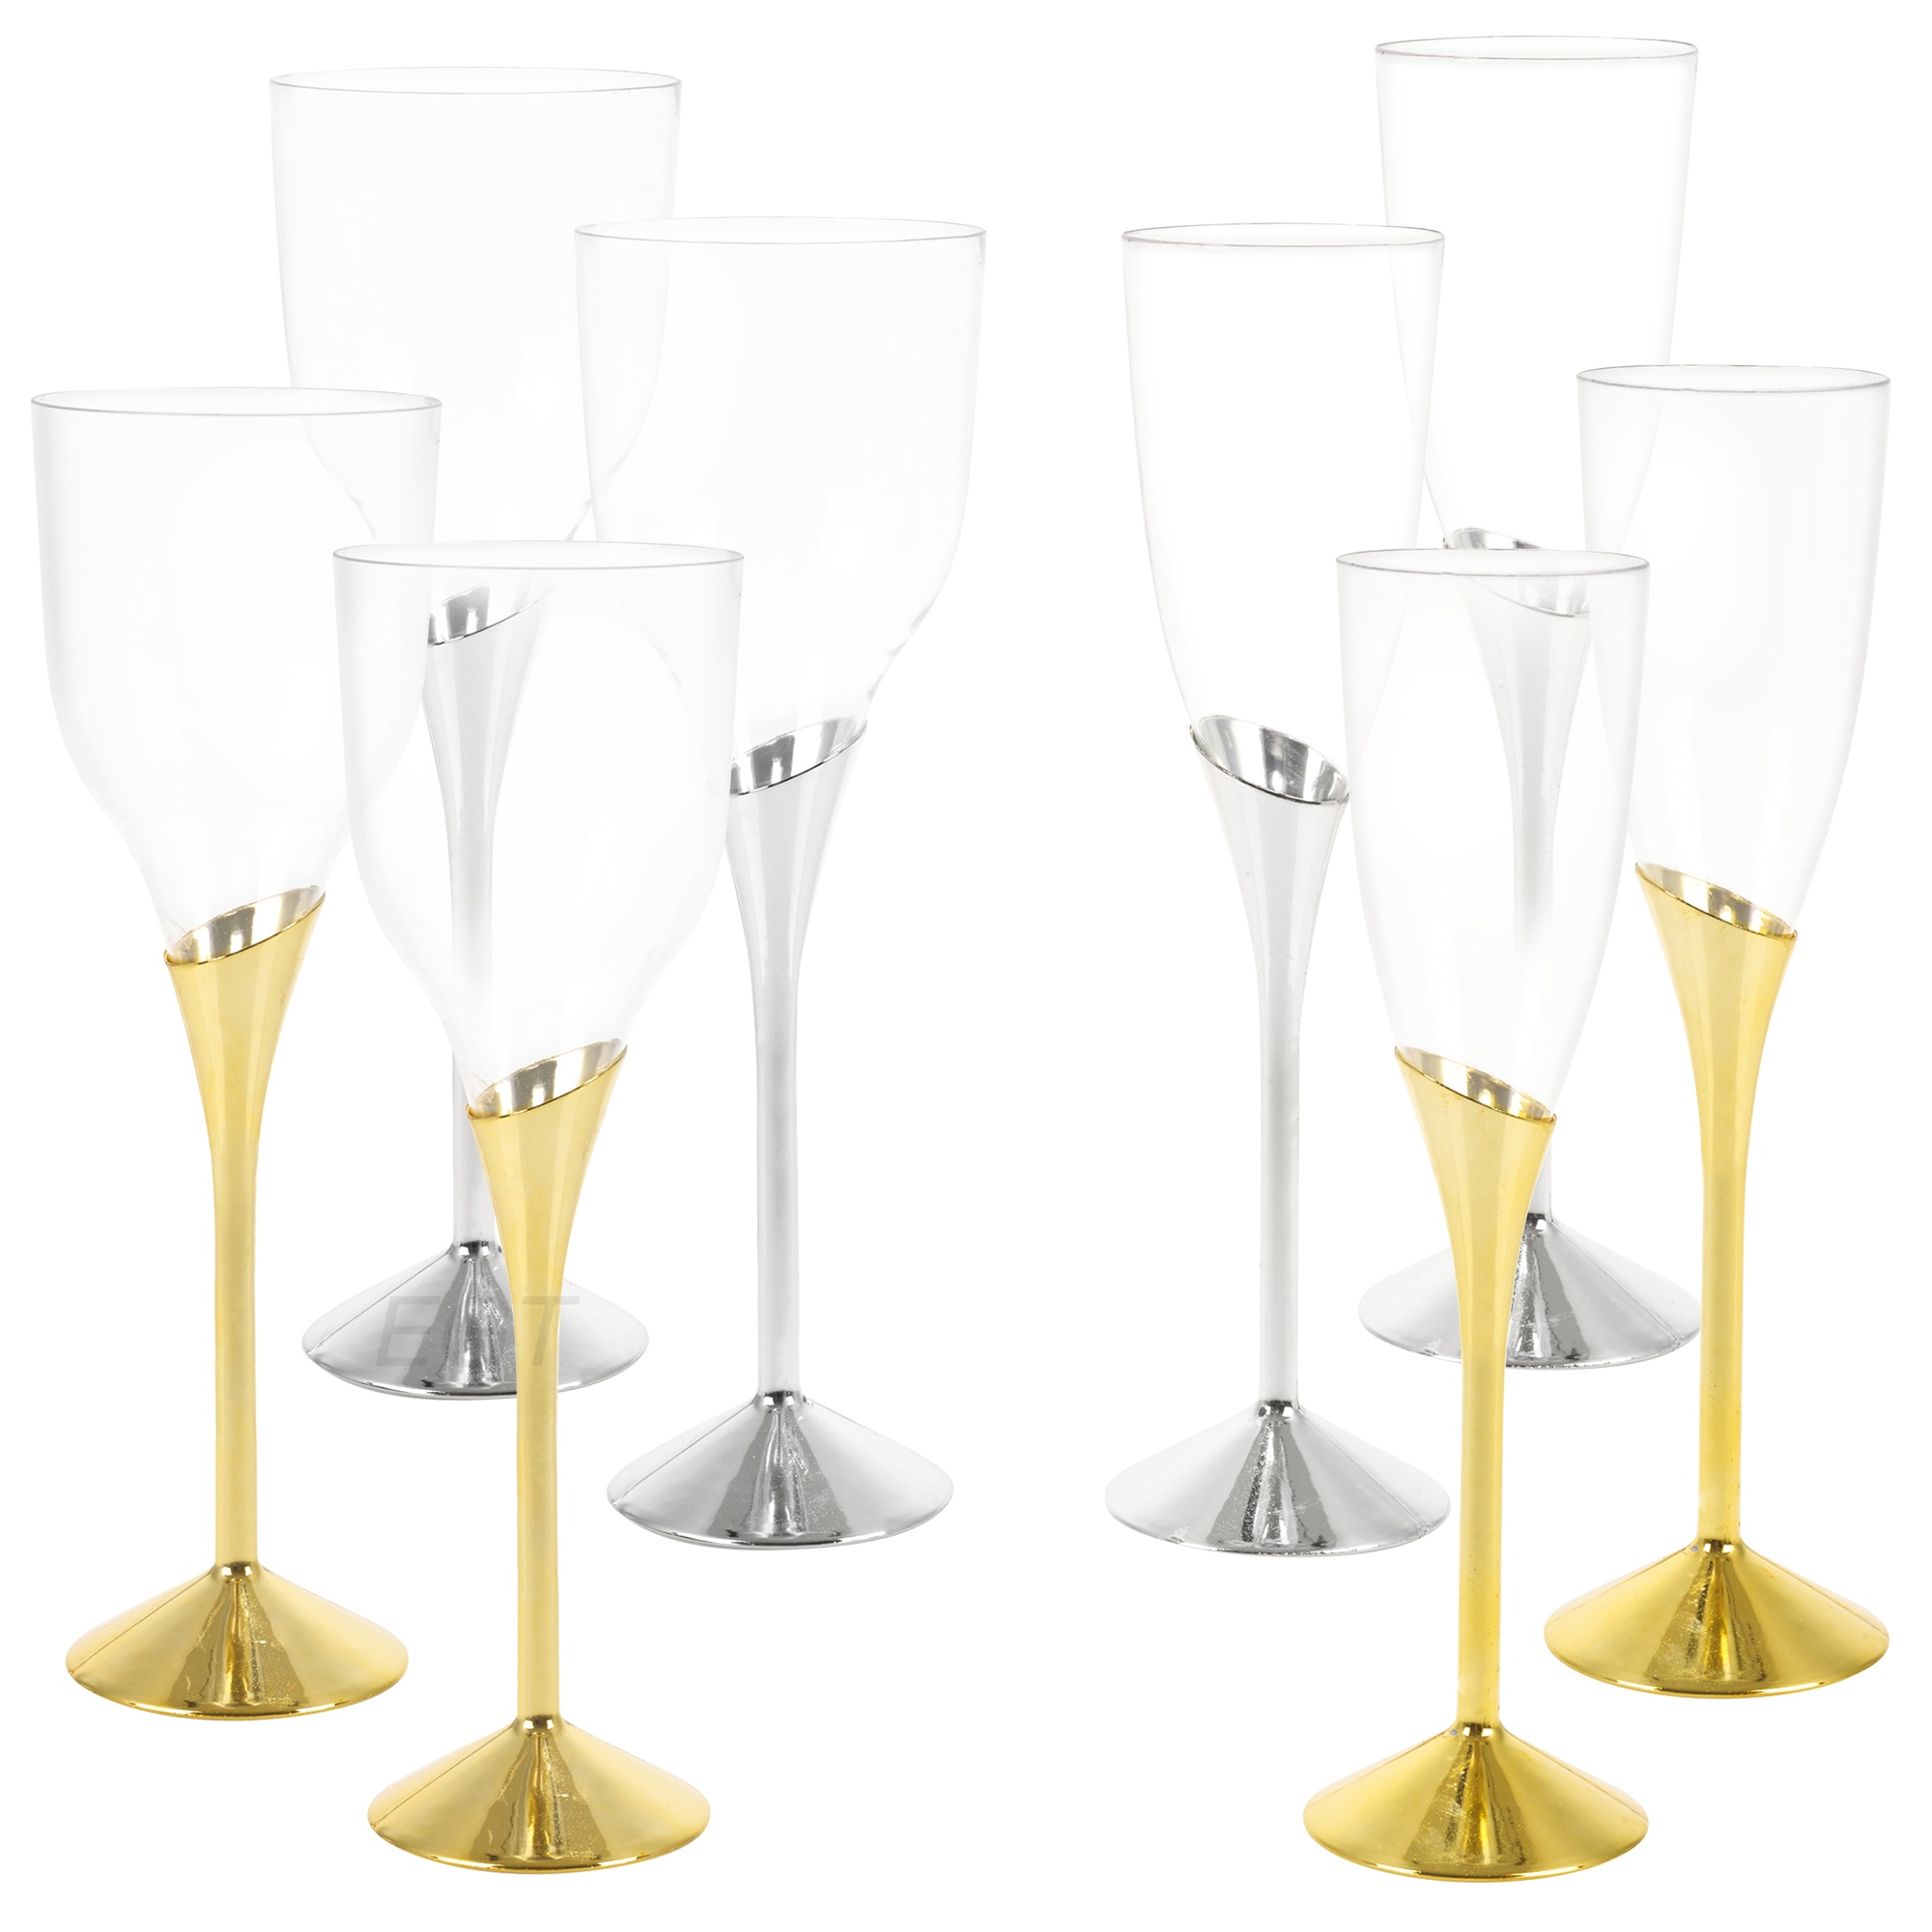 gold plastic wine glasses